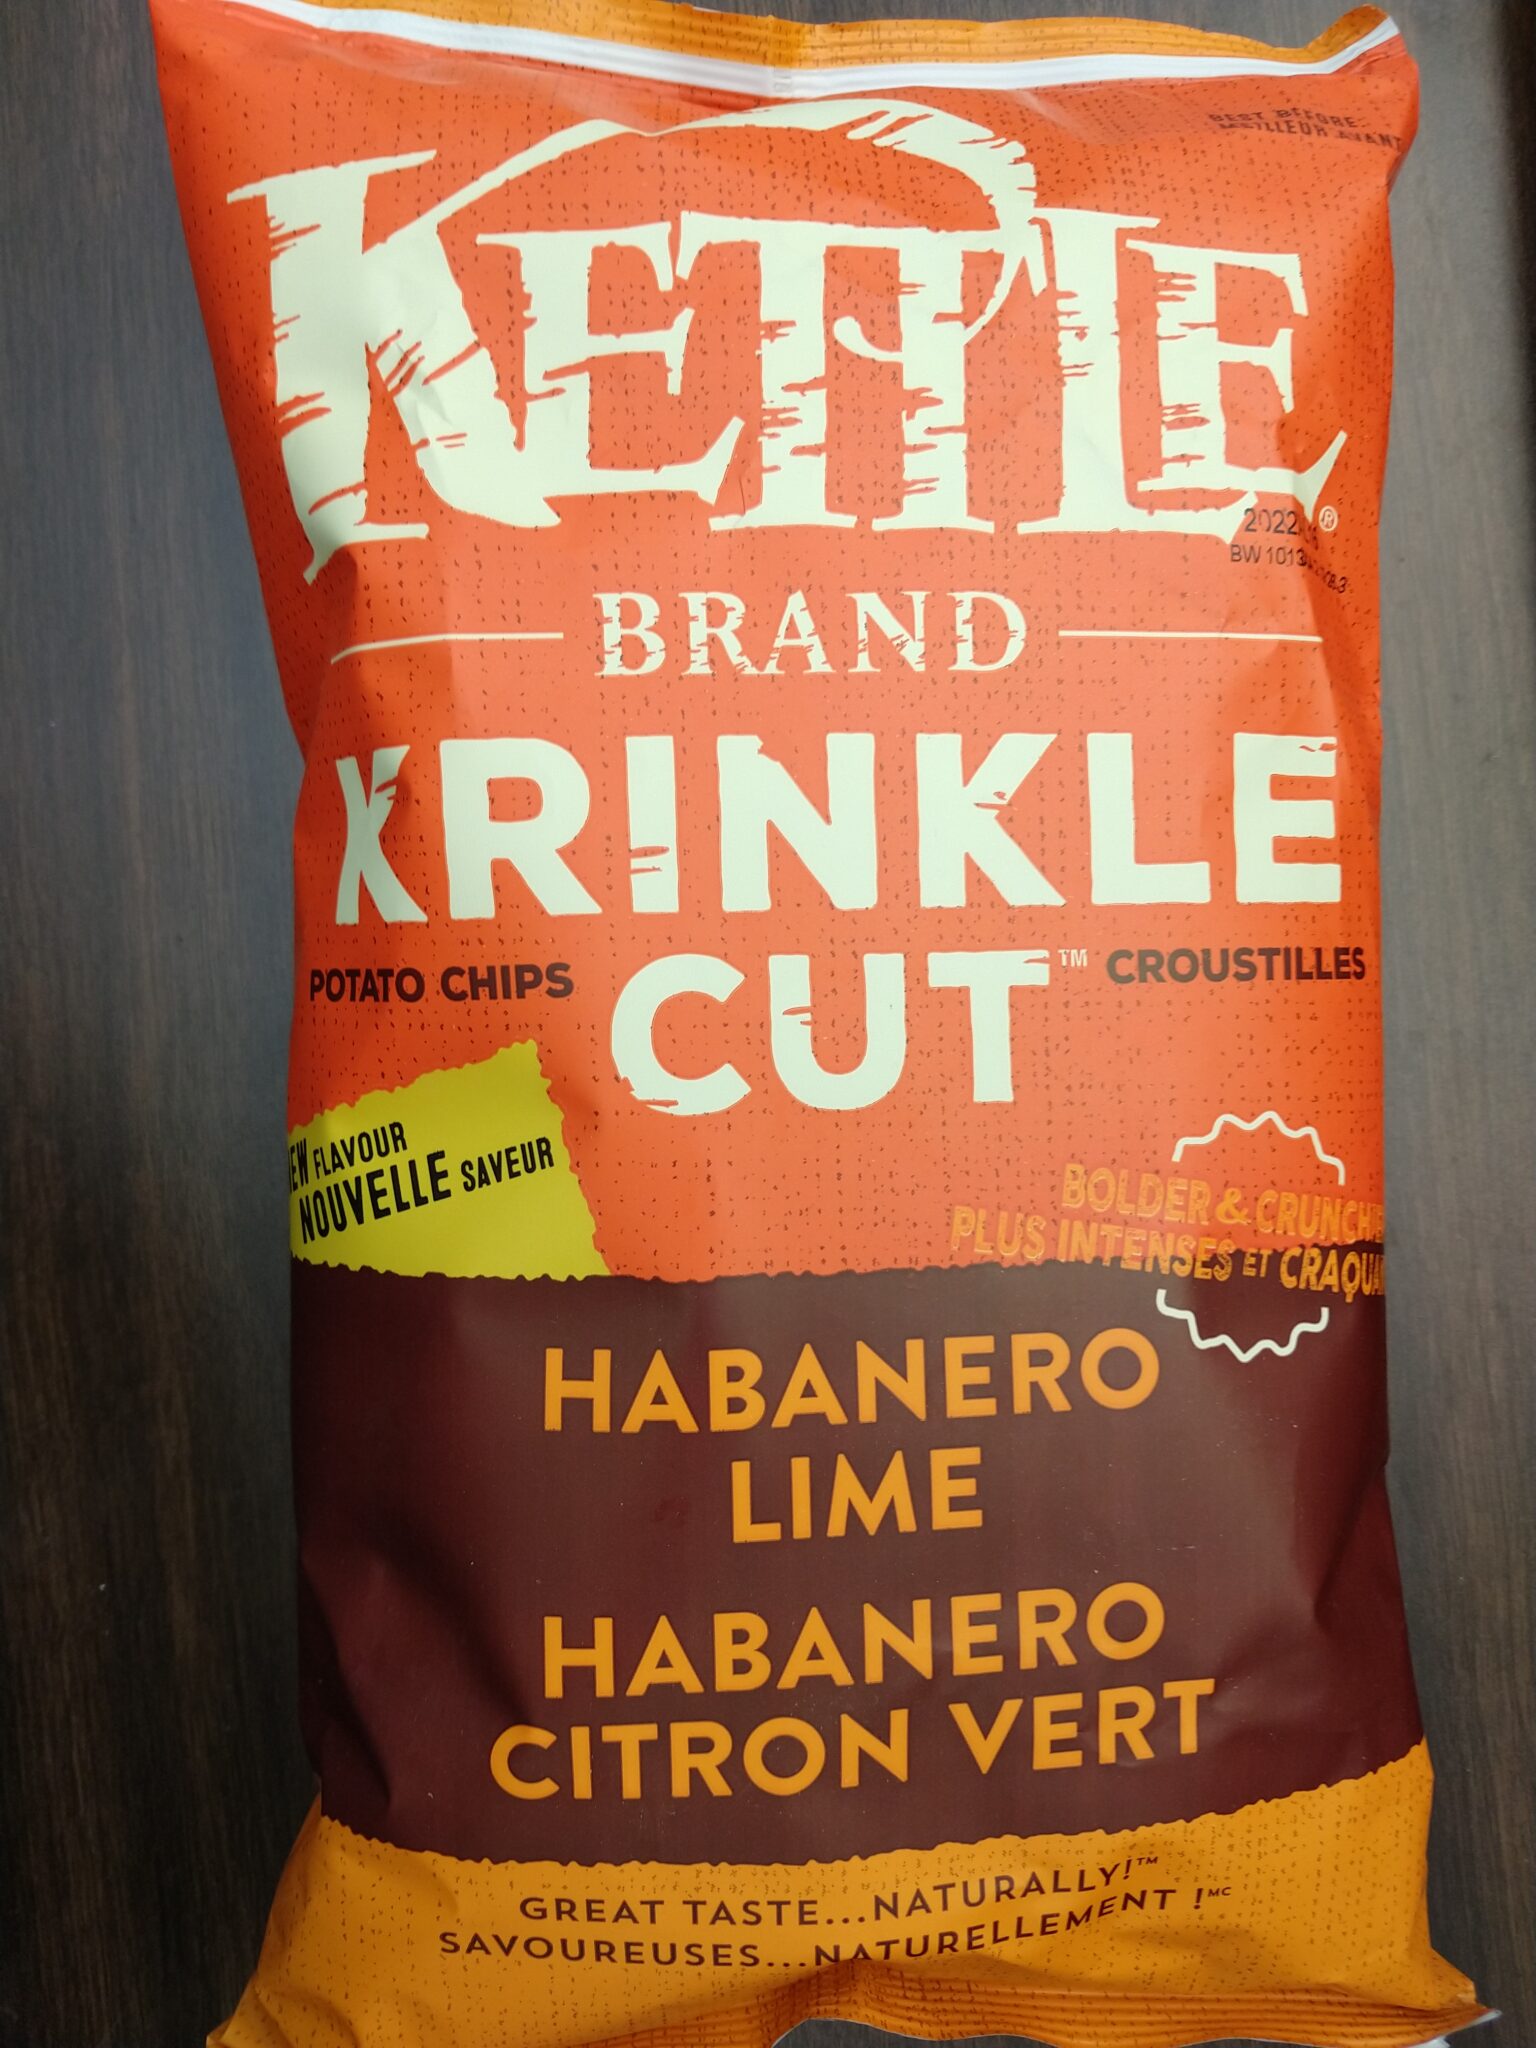 Kettle Brand – Krinkle Cut Habanero Lime